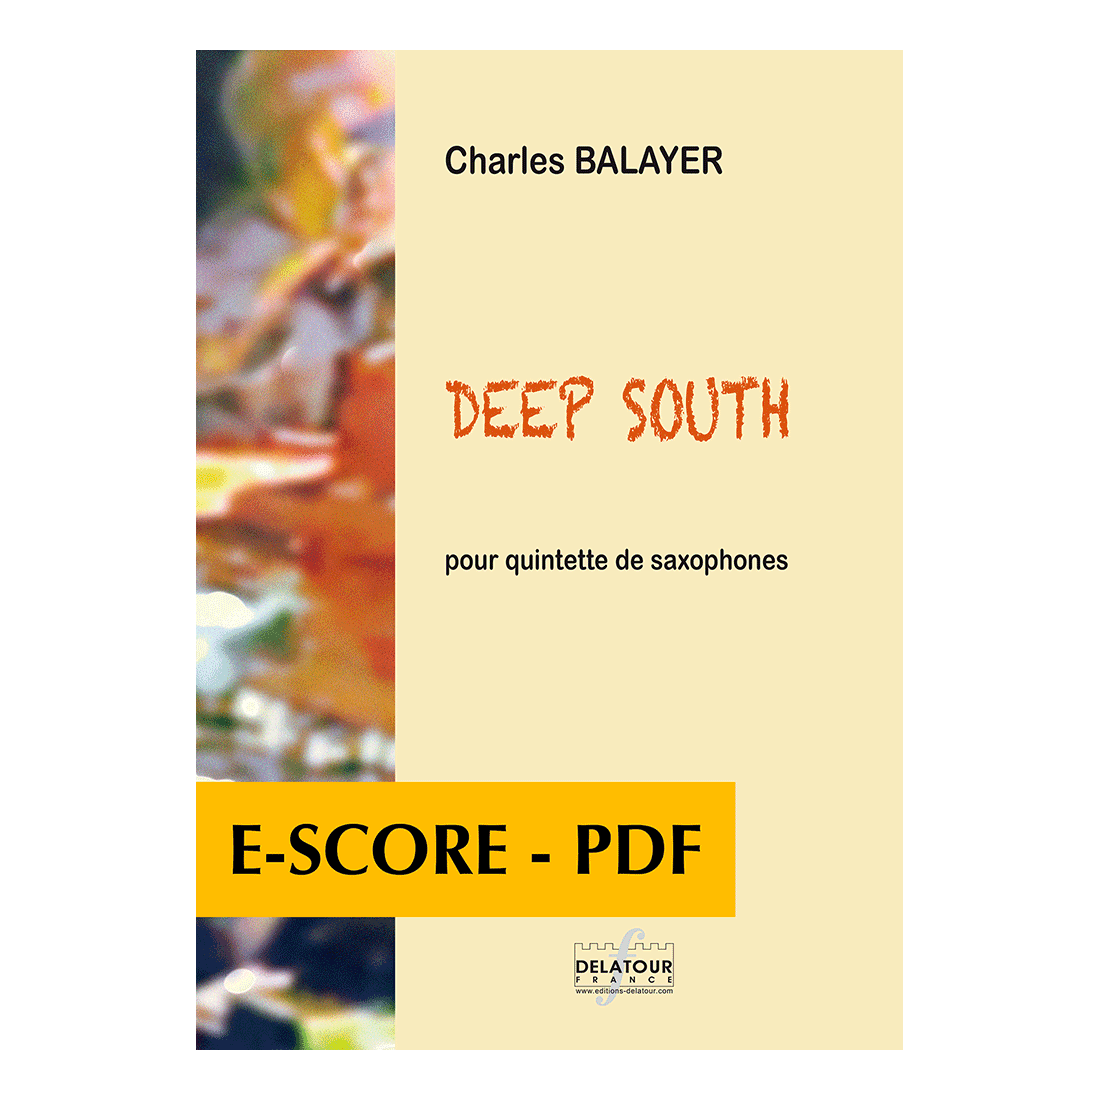 Deep south für Saxophonquintett - E-score PDF